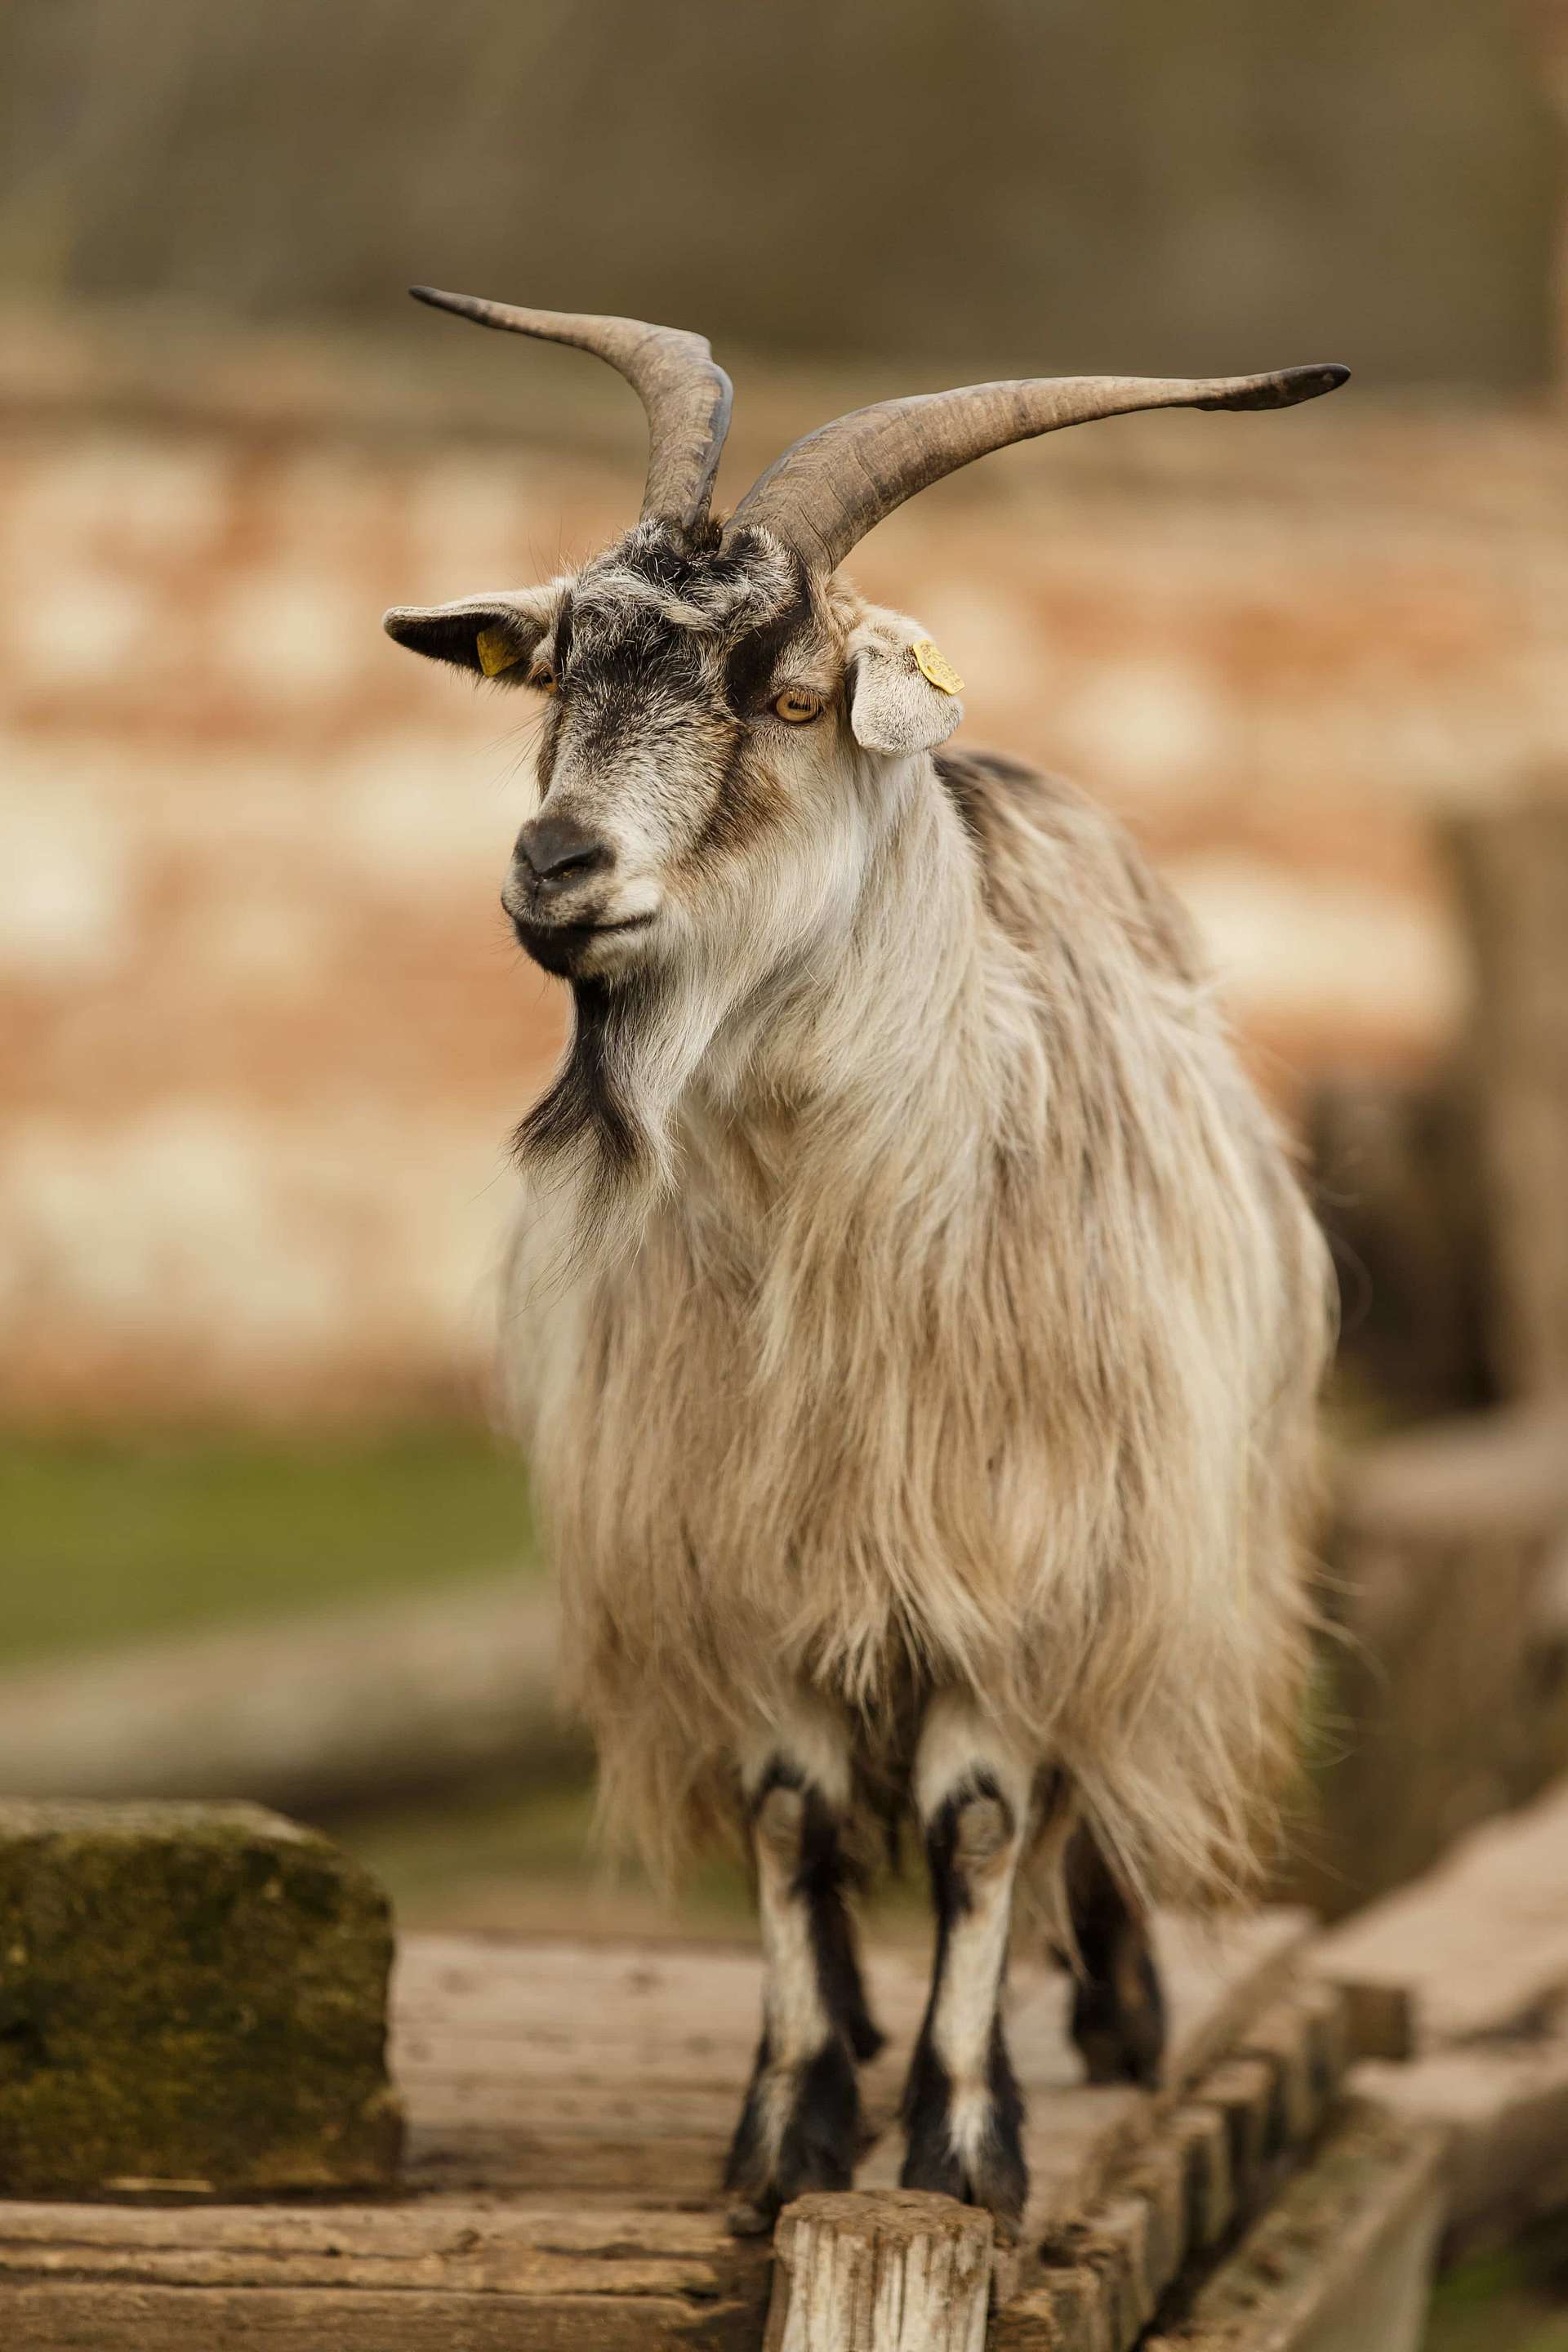 Baa Ram Ewe Sheep: Angora Goats and Cashmere Goats